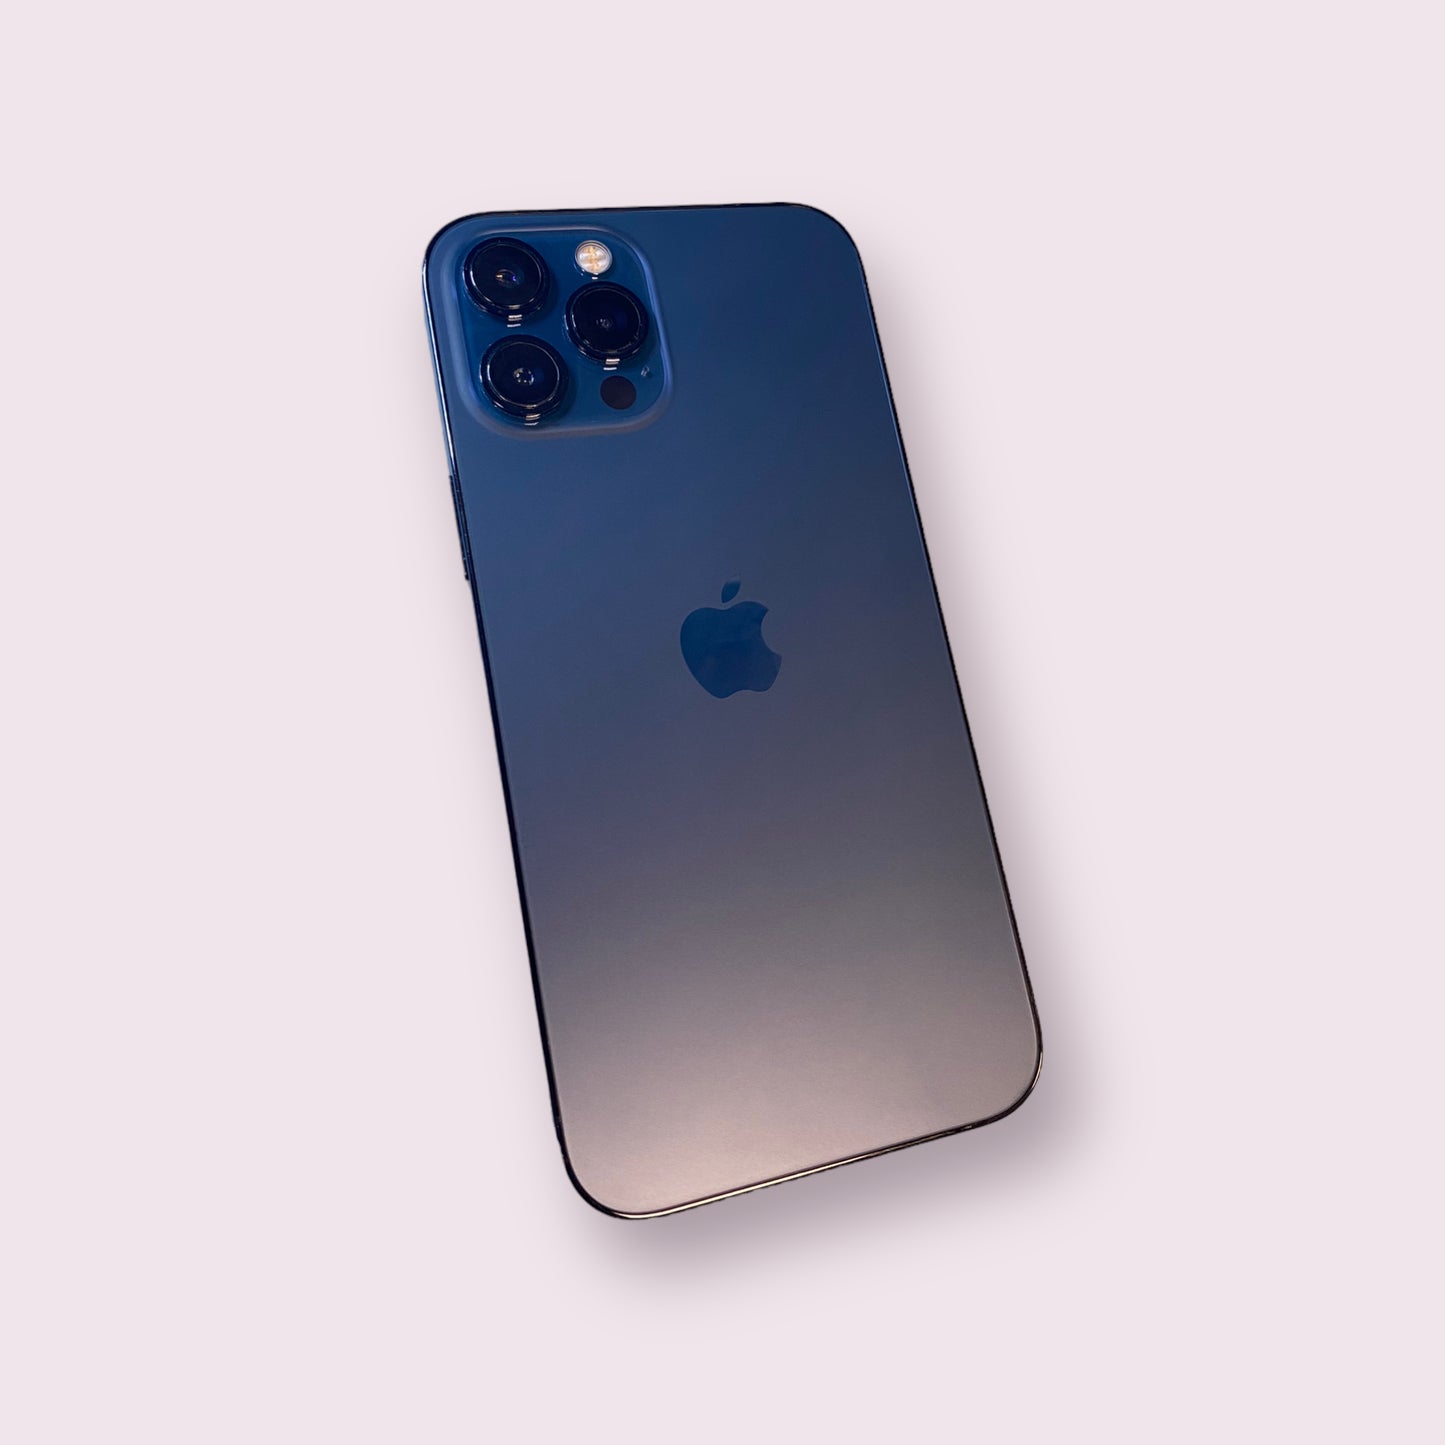 Apple iPhone 12 Pro Max 512GB Sierra Blue - Unlocked - Grade B+